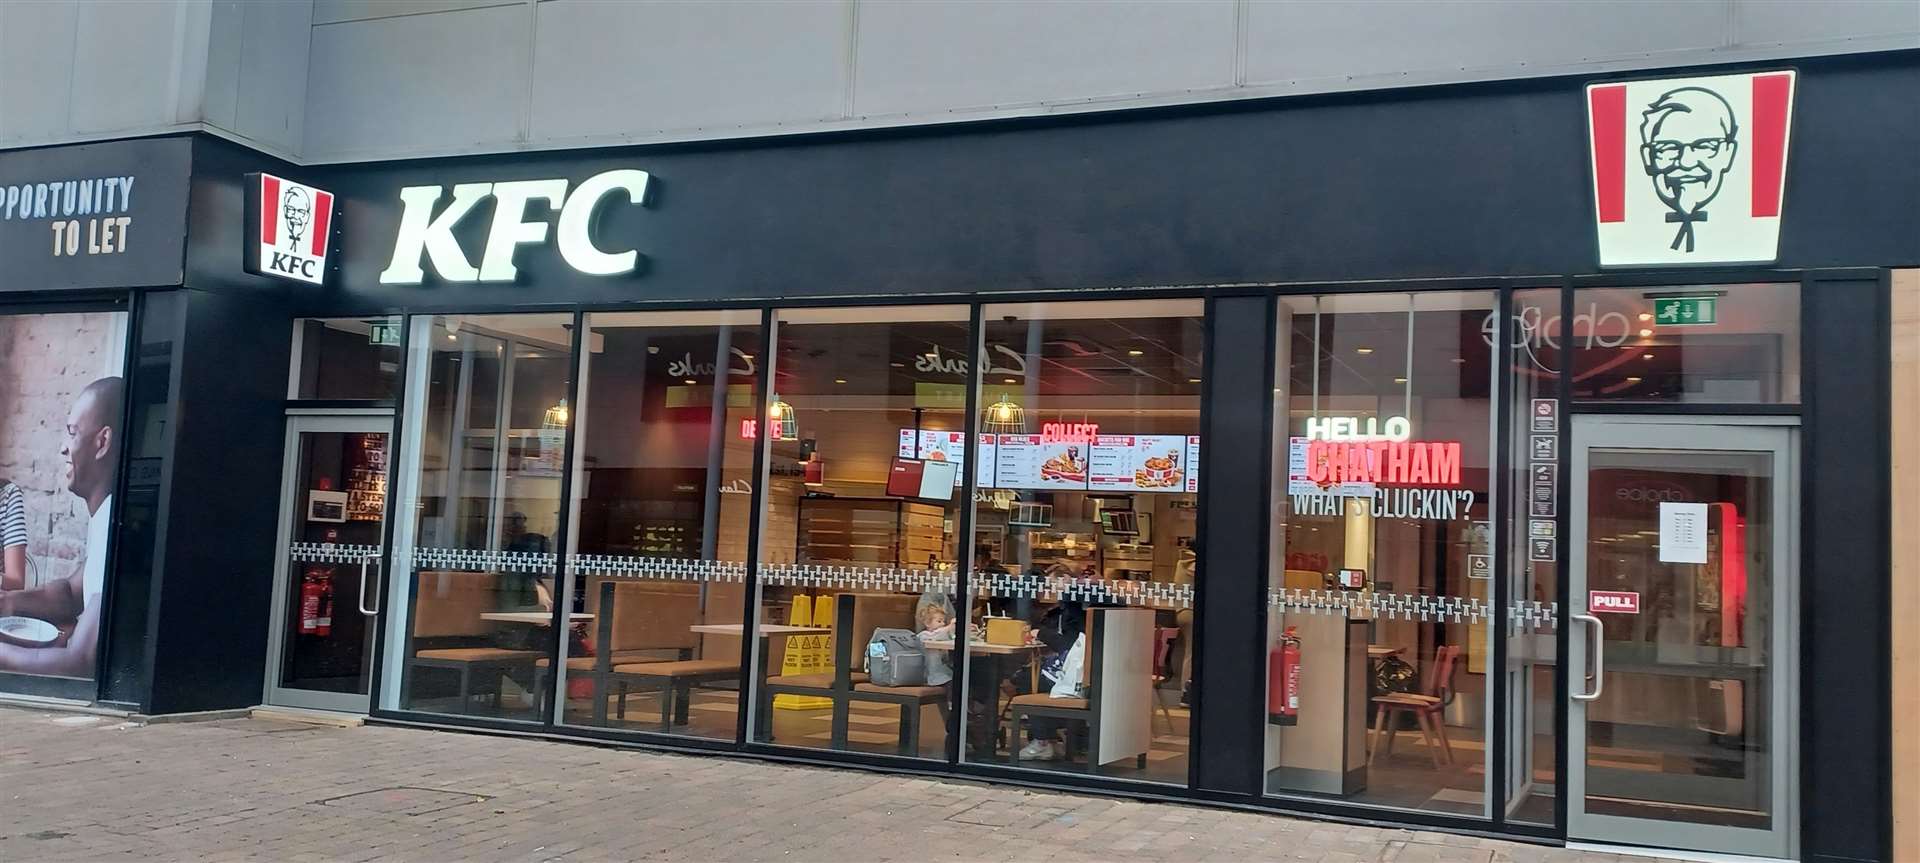 KFC has opened at Chatham Maritime